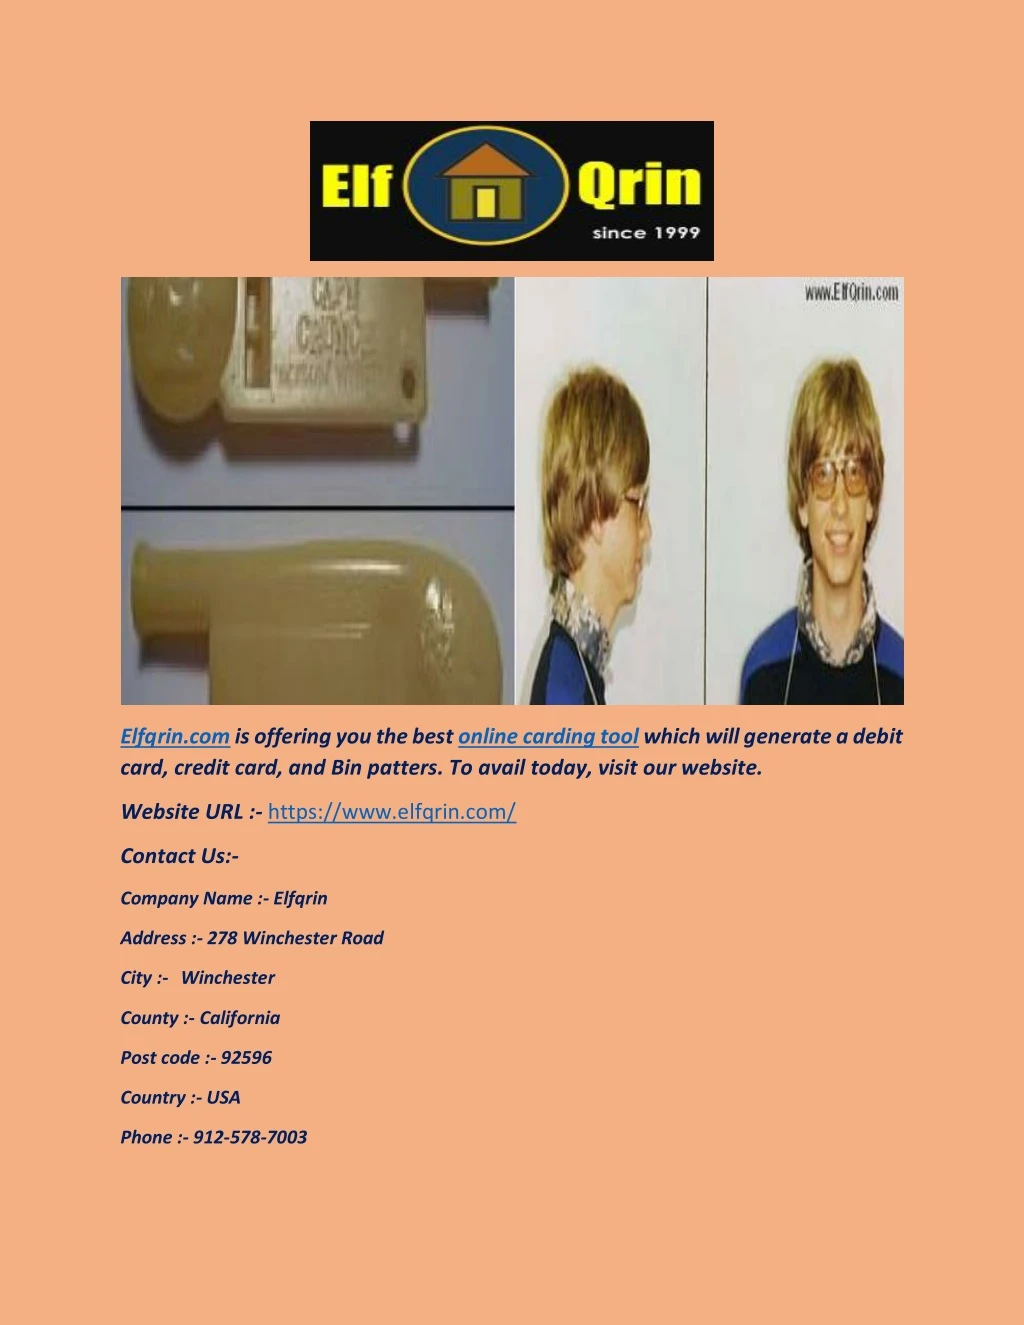 elfqrin com is offering you the best online